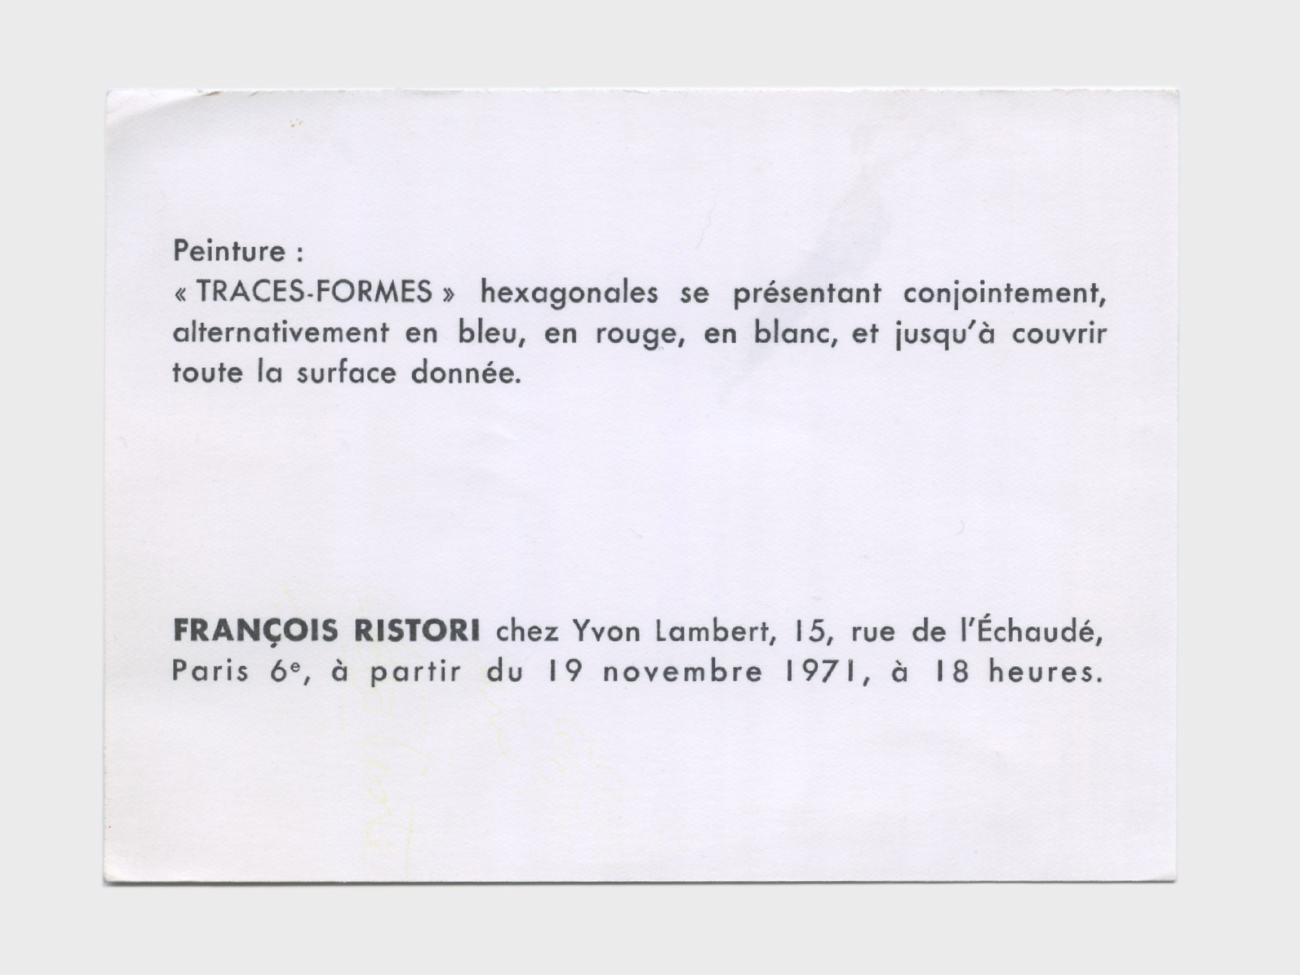 francois-ristori-exposition-yvon-lambert-1971-carton